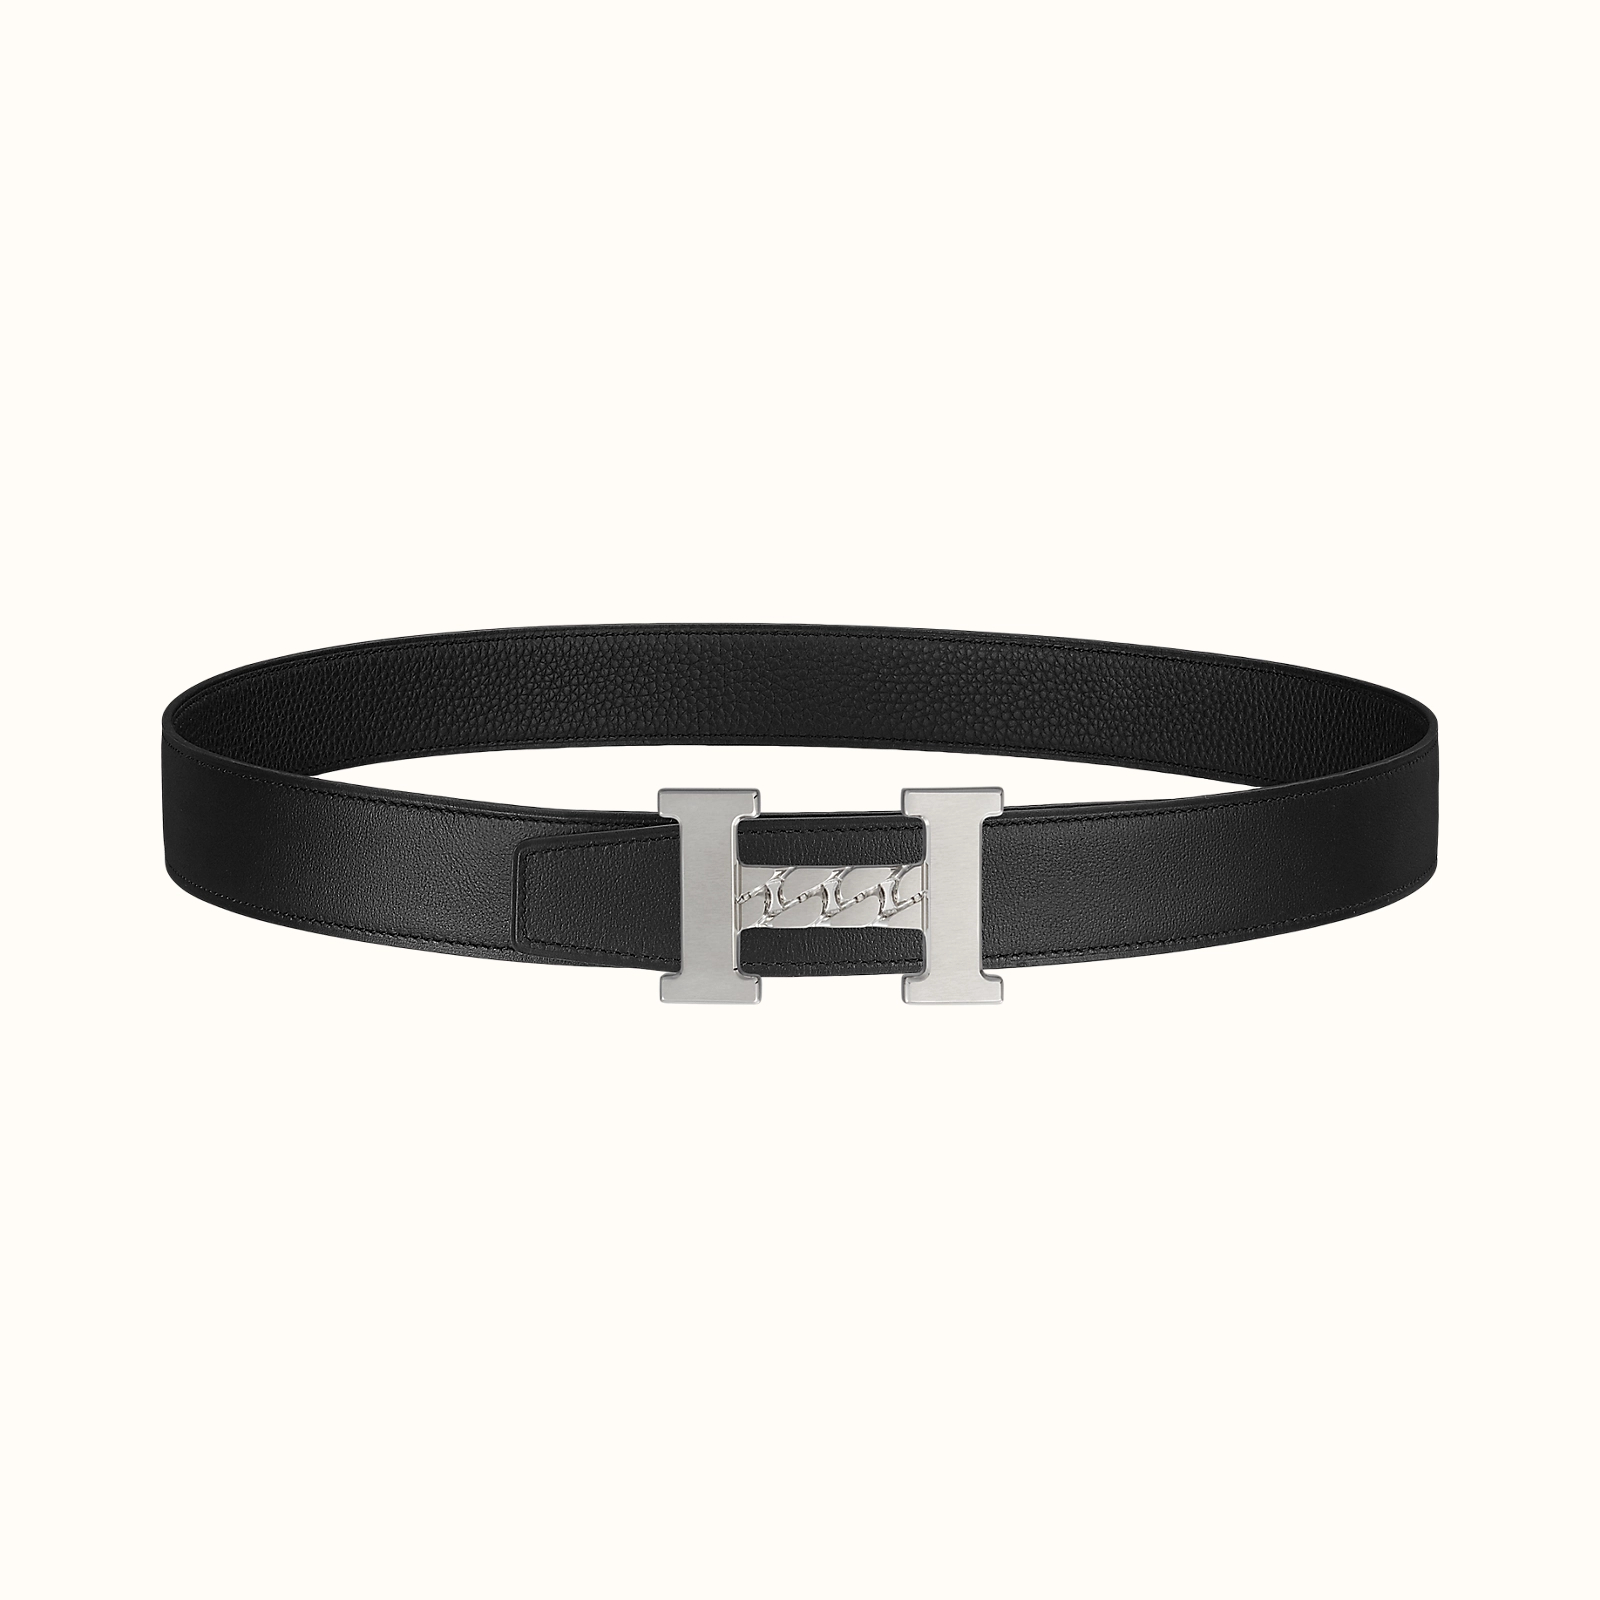 Hermes belt - You Shiny